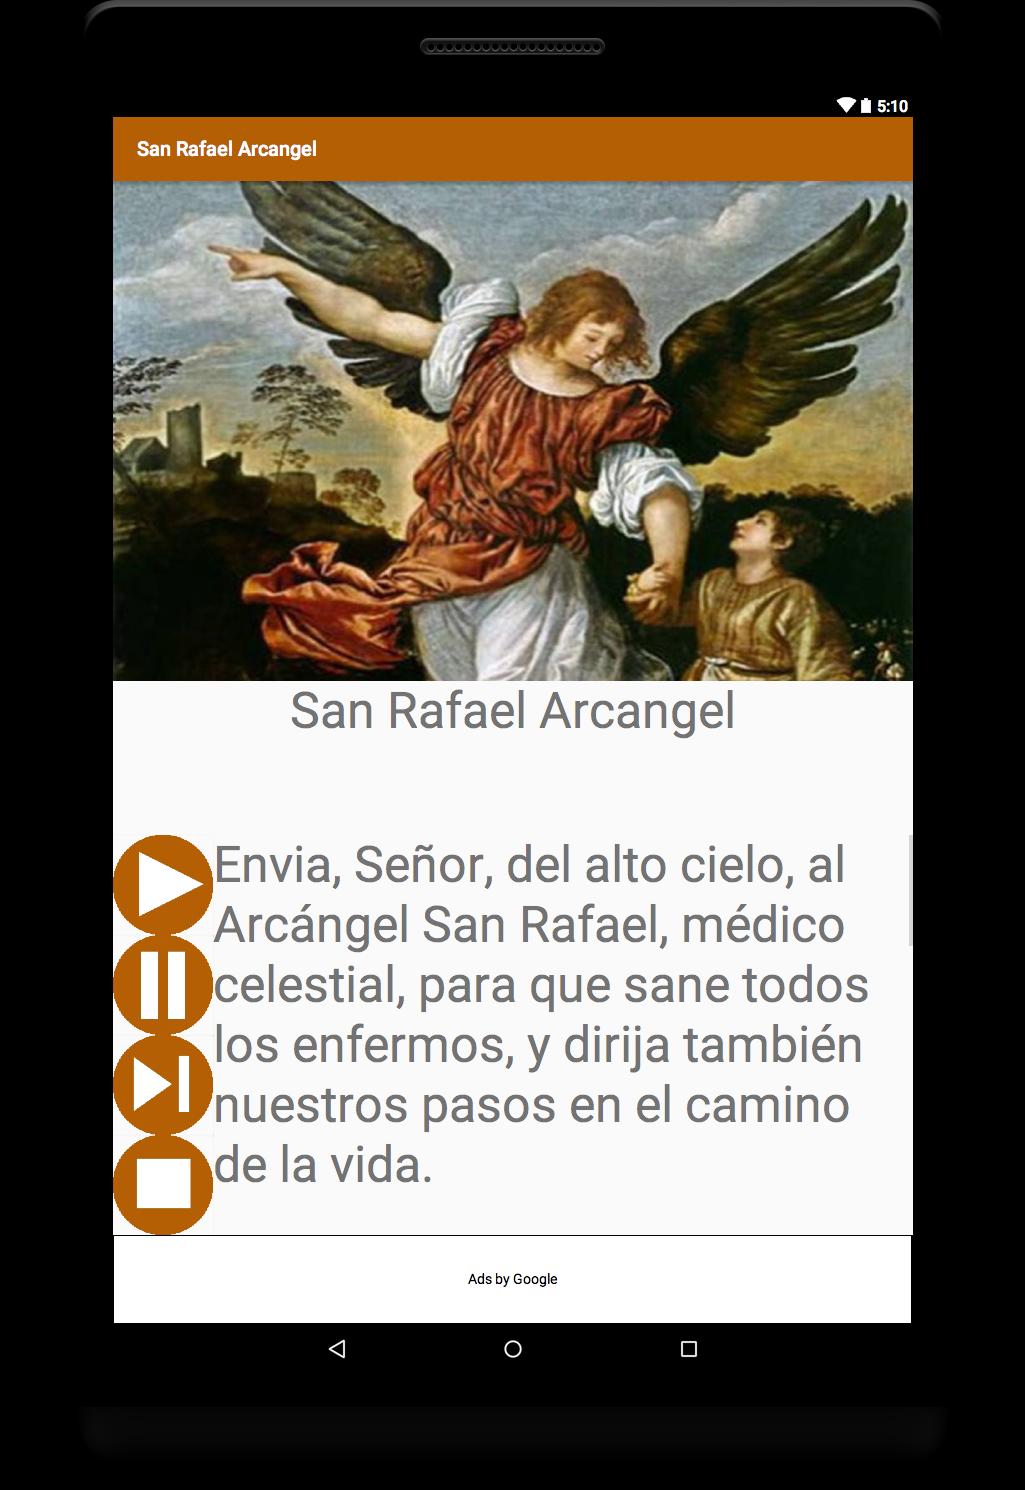 San Rafael Arcangel for Android - APK Download